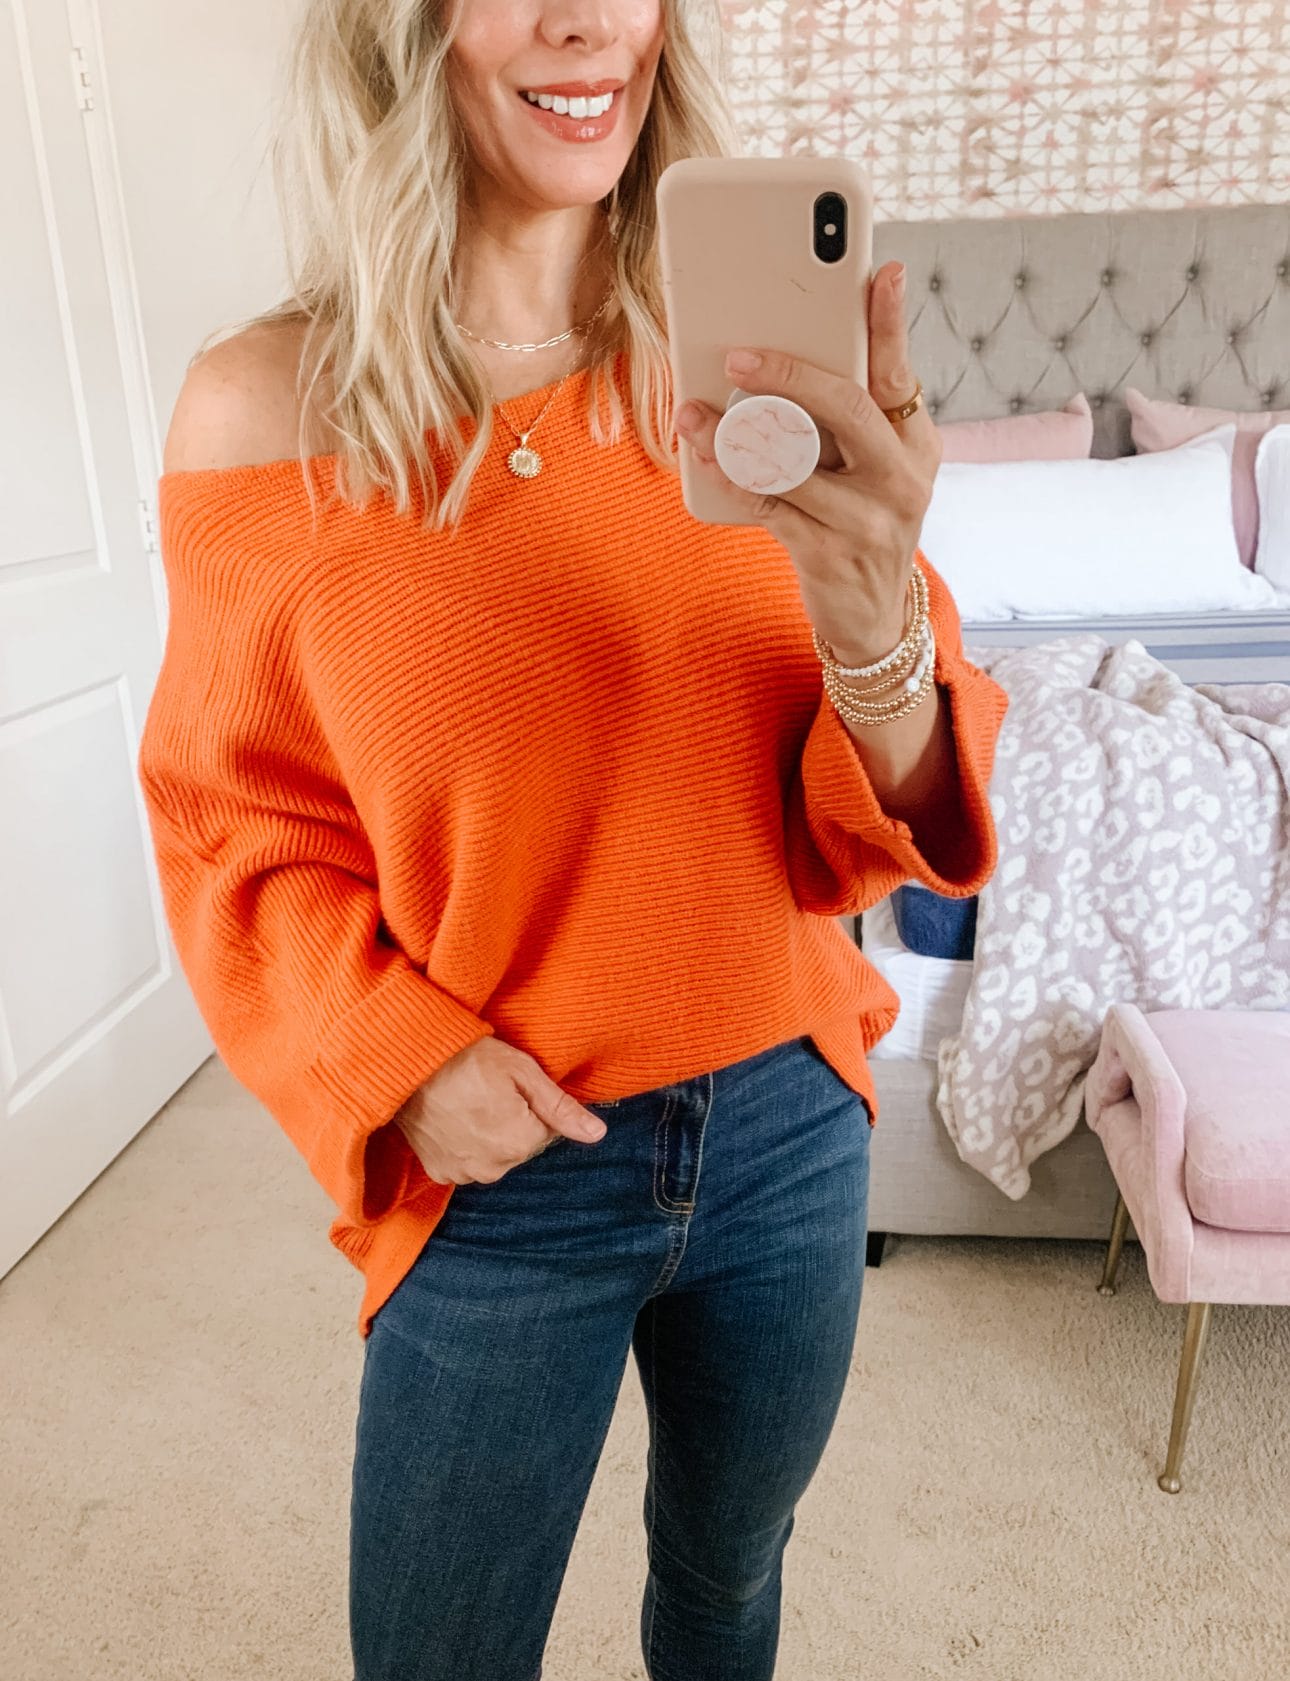 Amazon Fashion, Orange Sweater, Jeans, Booties 